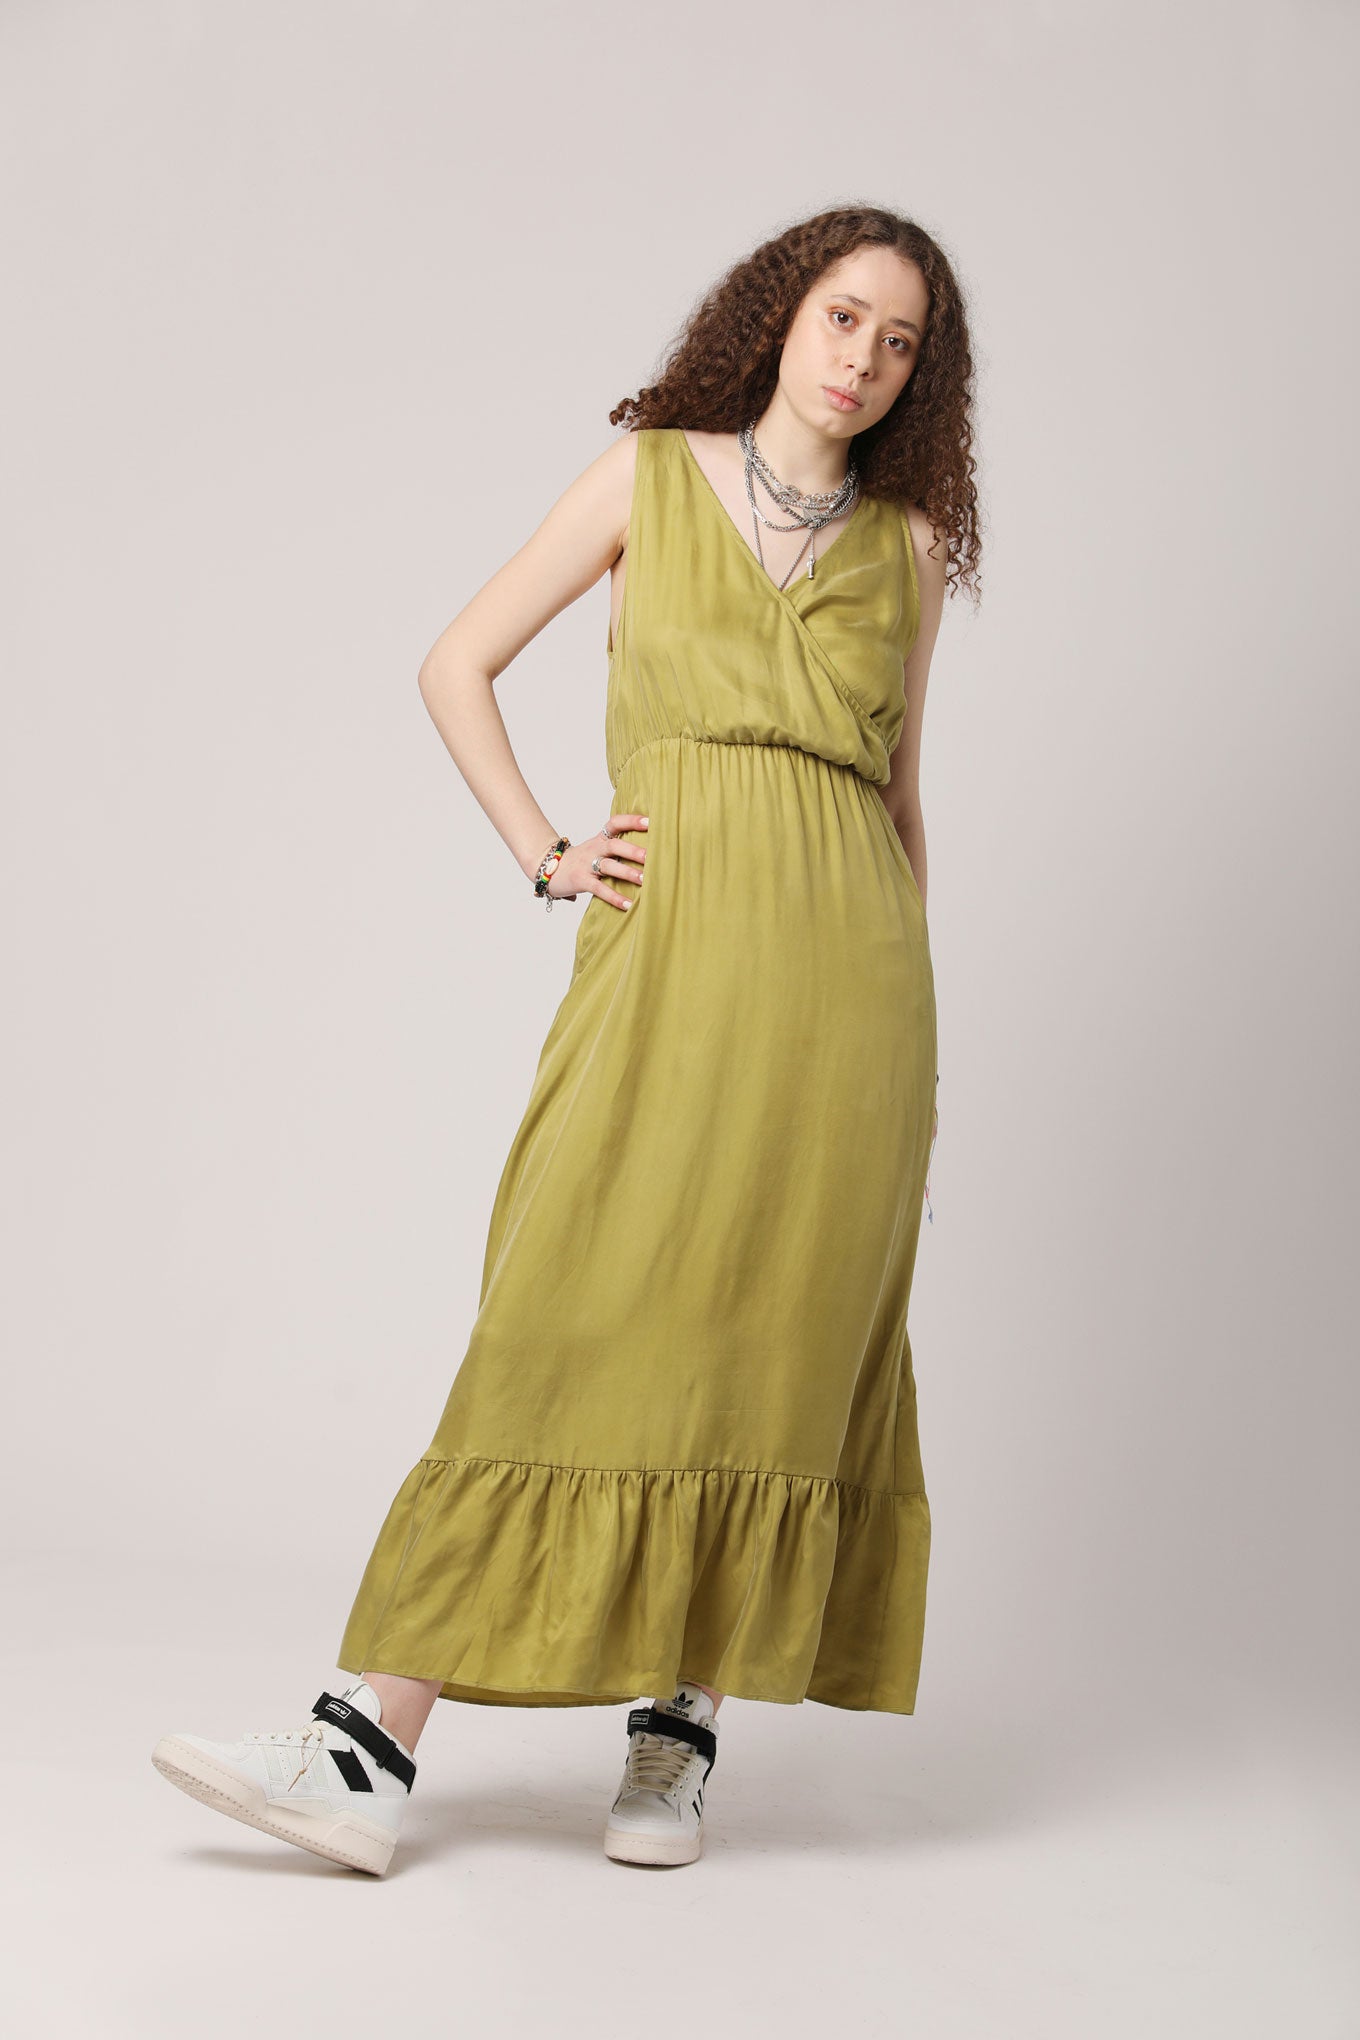 WHIRLYGIG Cupro Maxi Dress Green, SIZE 4 / UK 14 / EUR 42